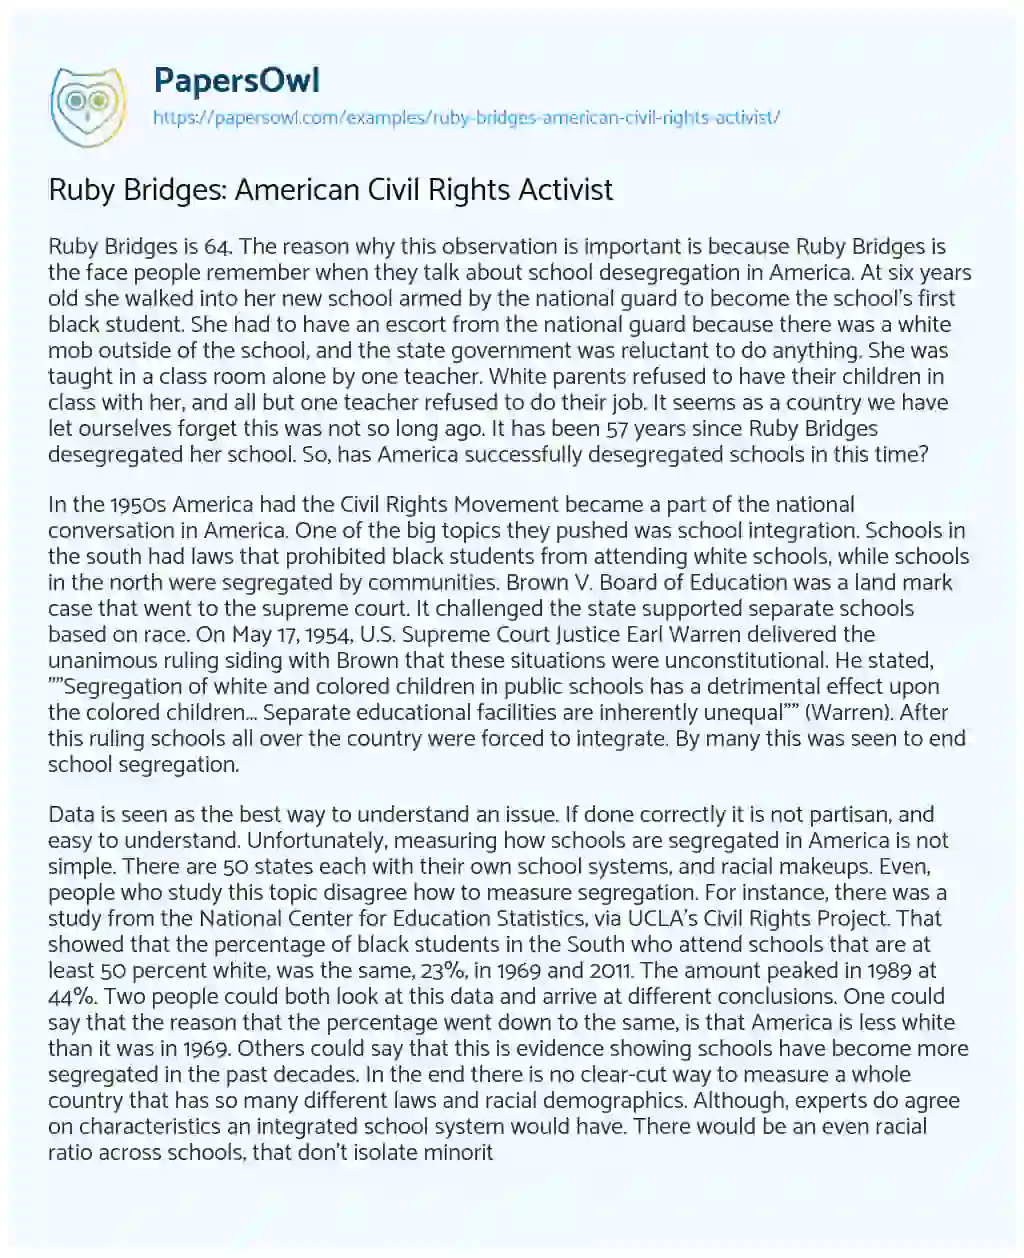 Essay on Ruby Bridges: American Civil Rights Activist